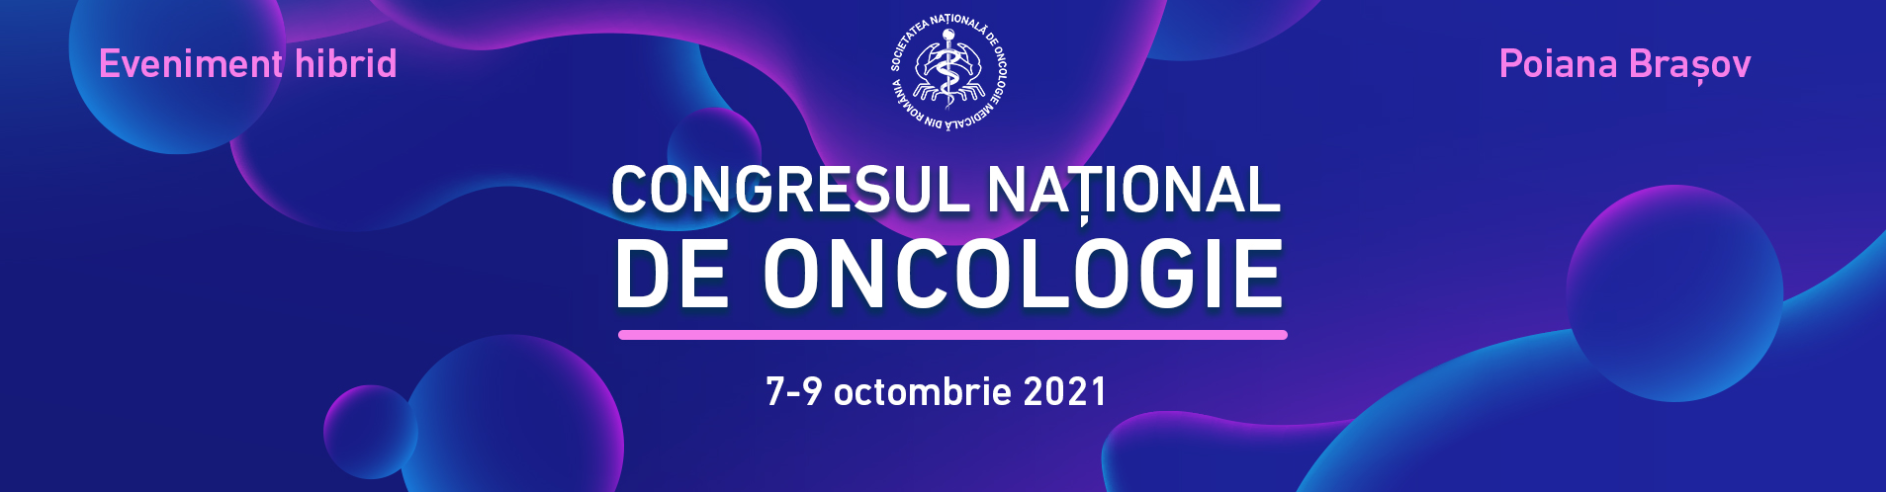 Congresul Național de Oncologie - ediția 2021